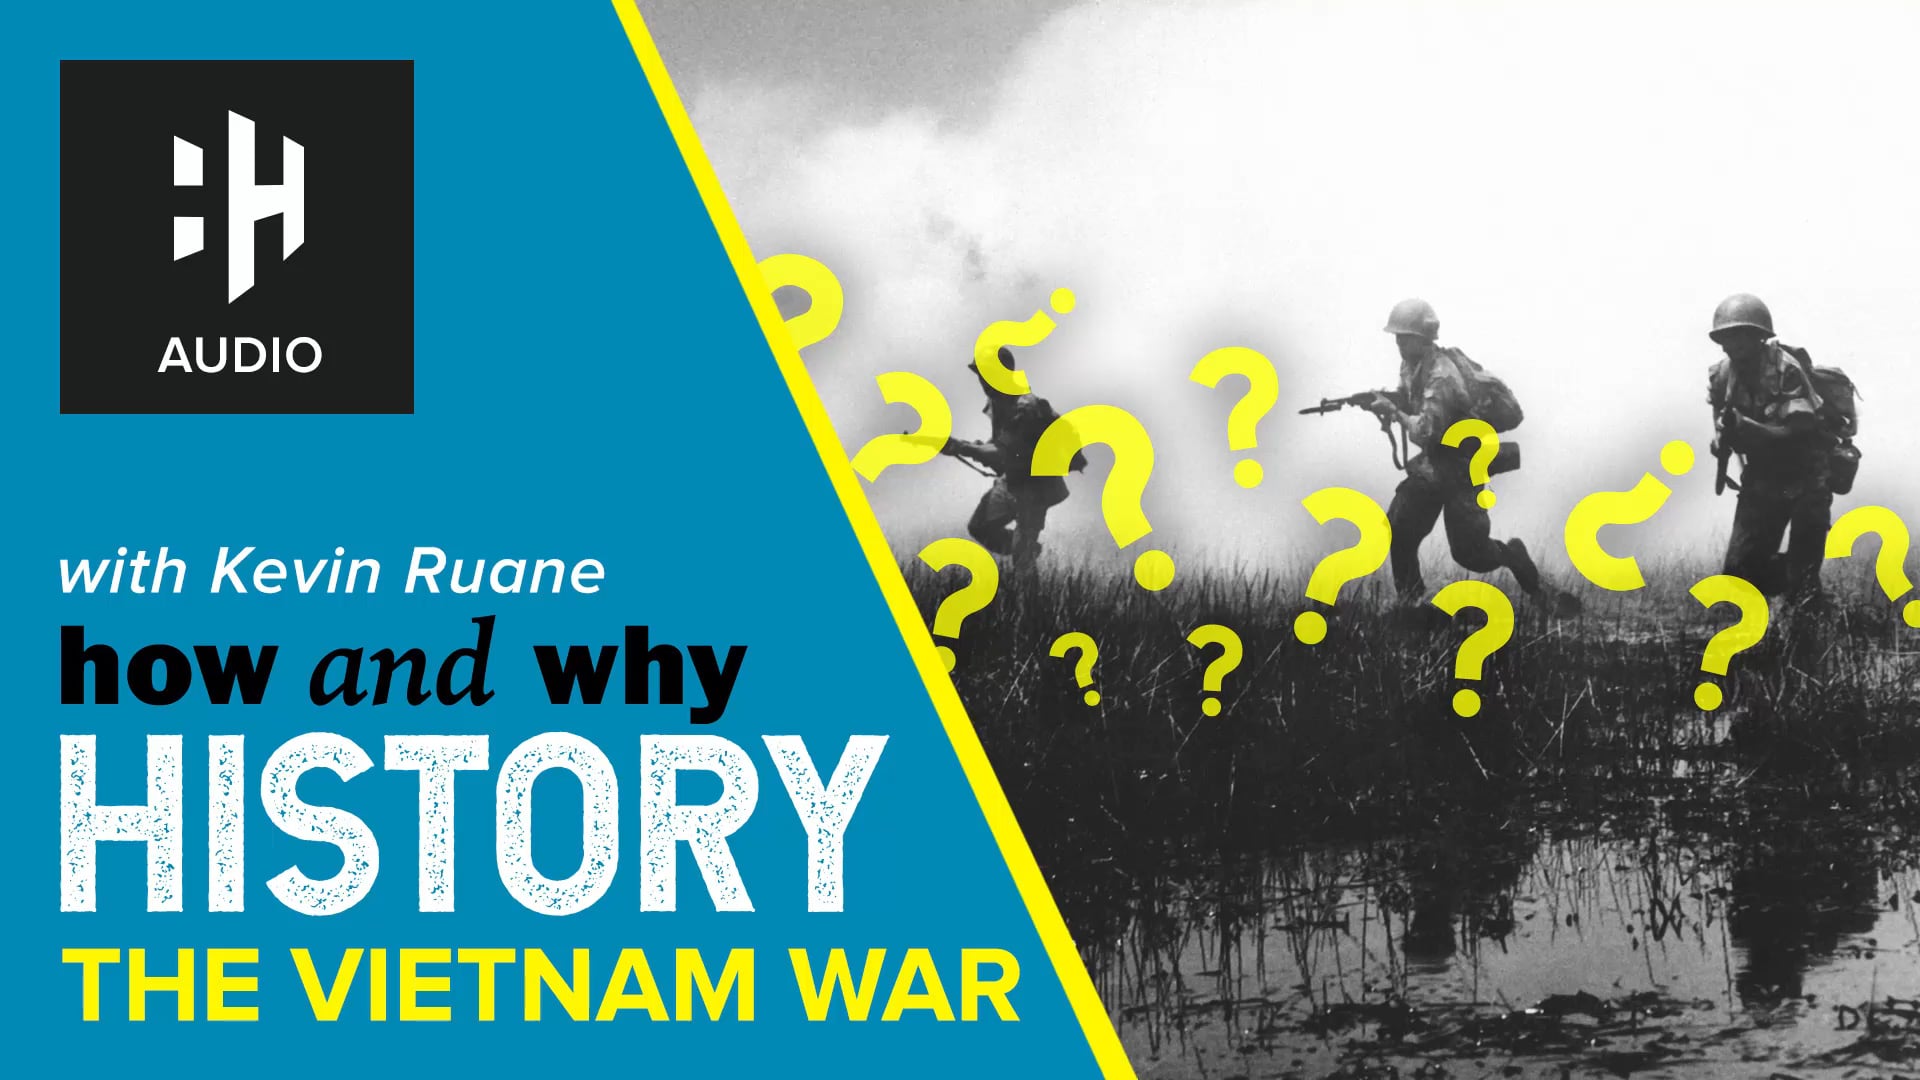 the vietnam war was first called